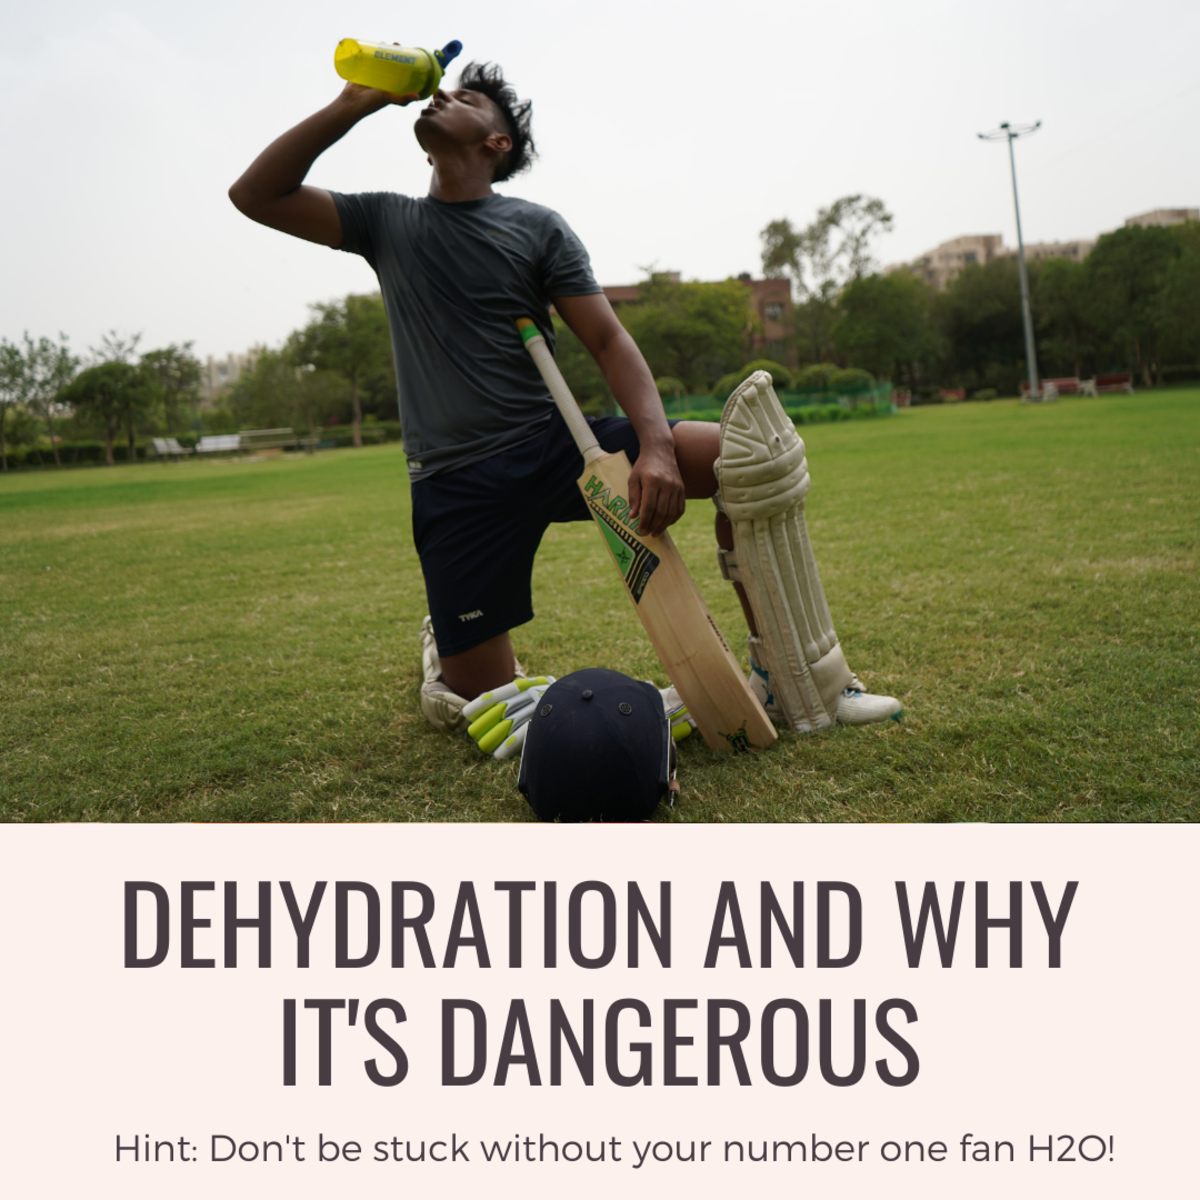 Risks of Dehydration